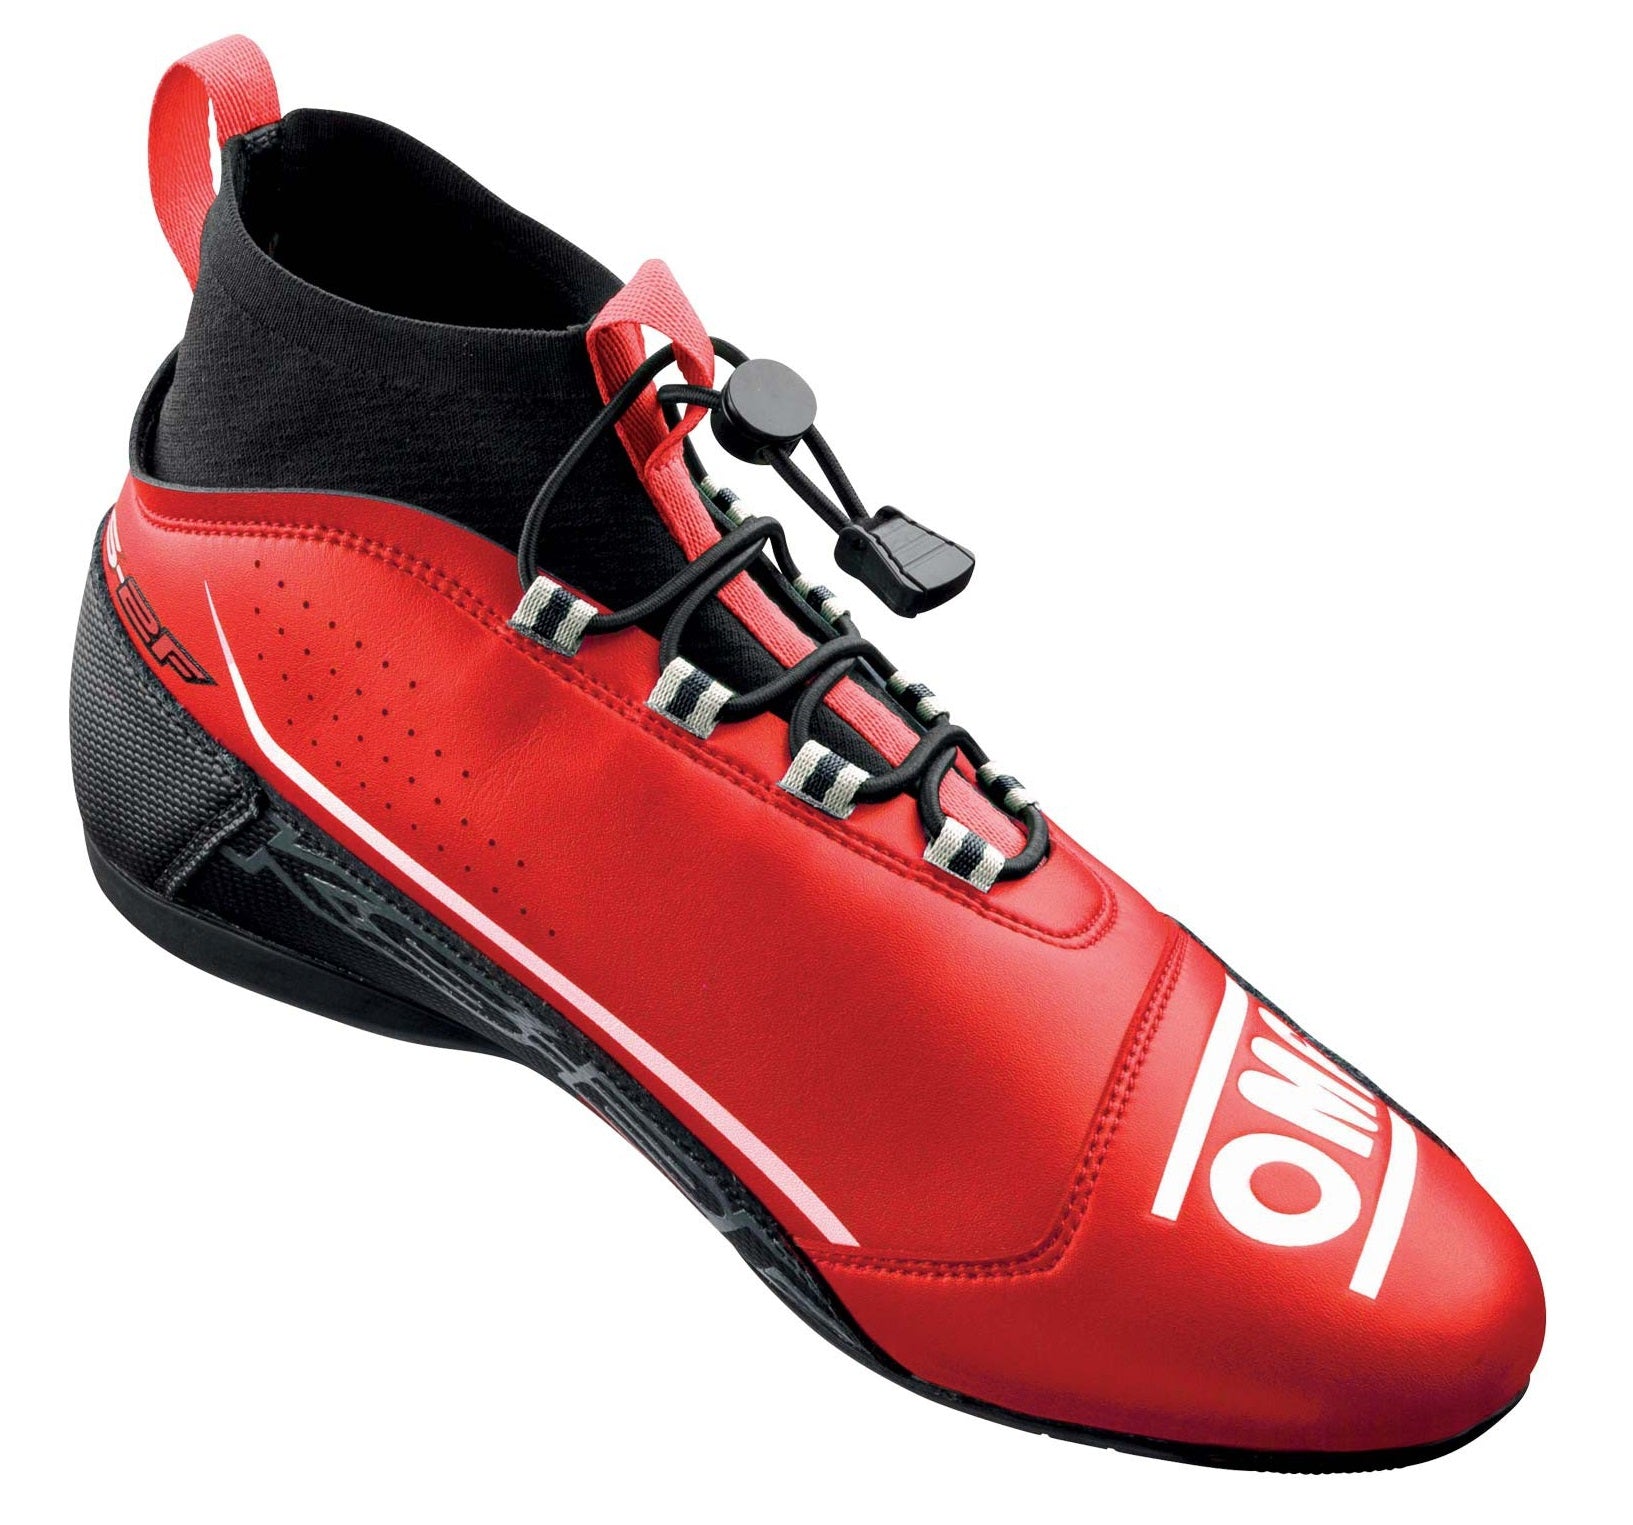 OMP KC0-0830-A01-060-40 KS-2F Karting shoes, red/black, size 40 Photo-1 